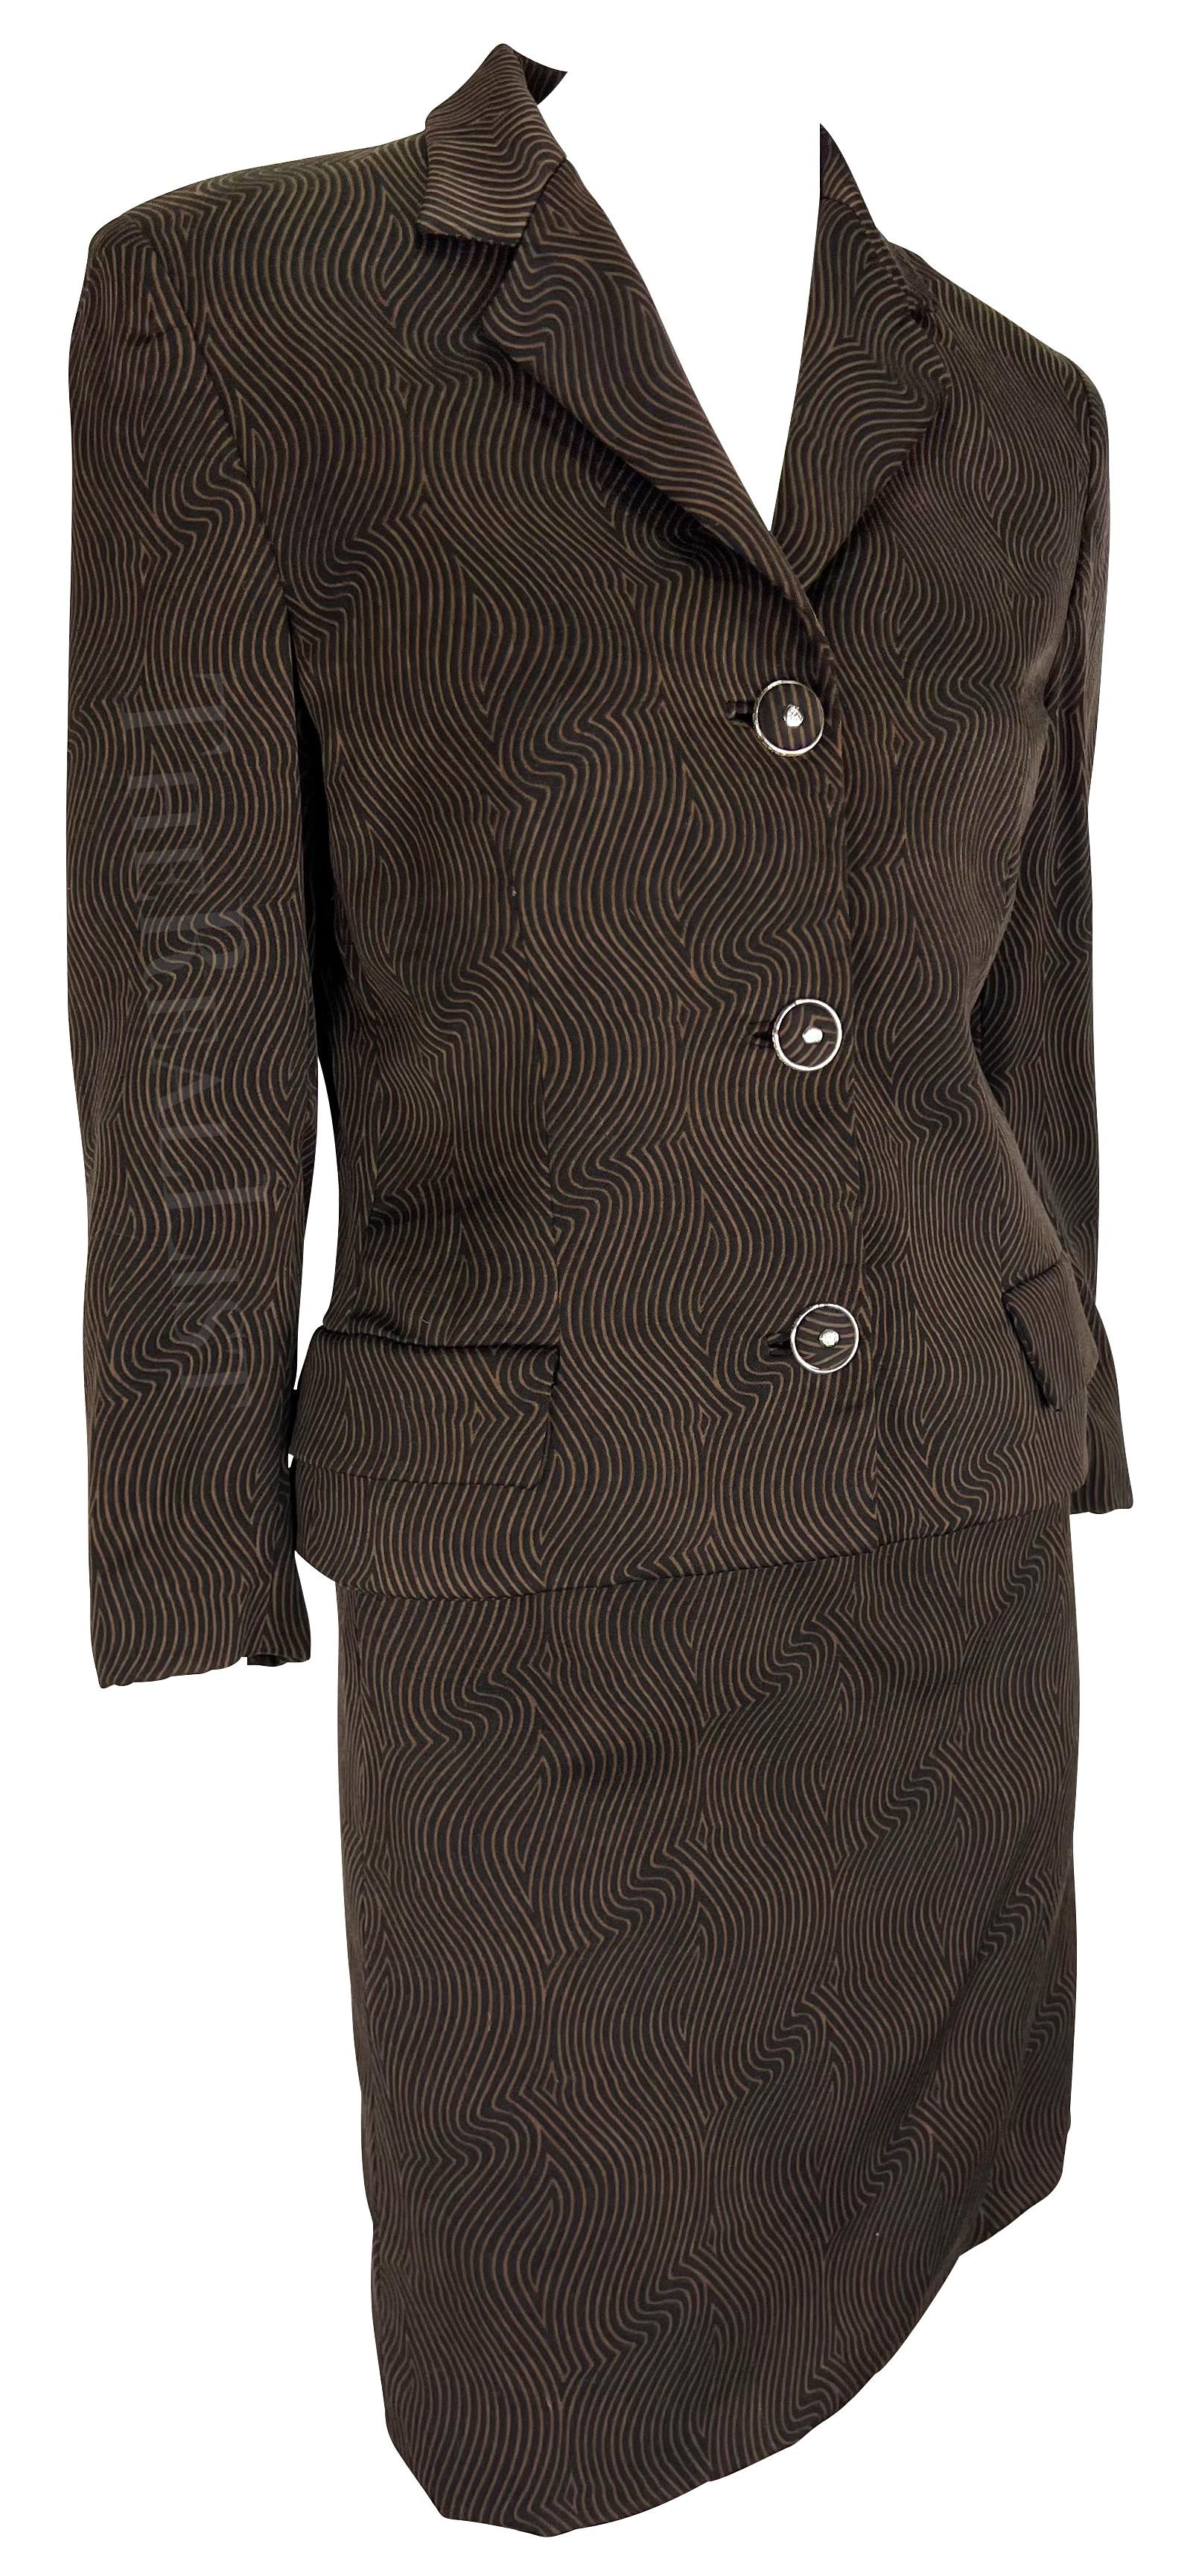 S/S 1996 Gianni Versace Black Brown Abstract Op-Art Print Medusa Belt Skirt Suit For Sale 2